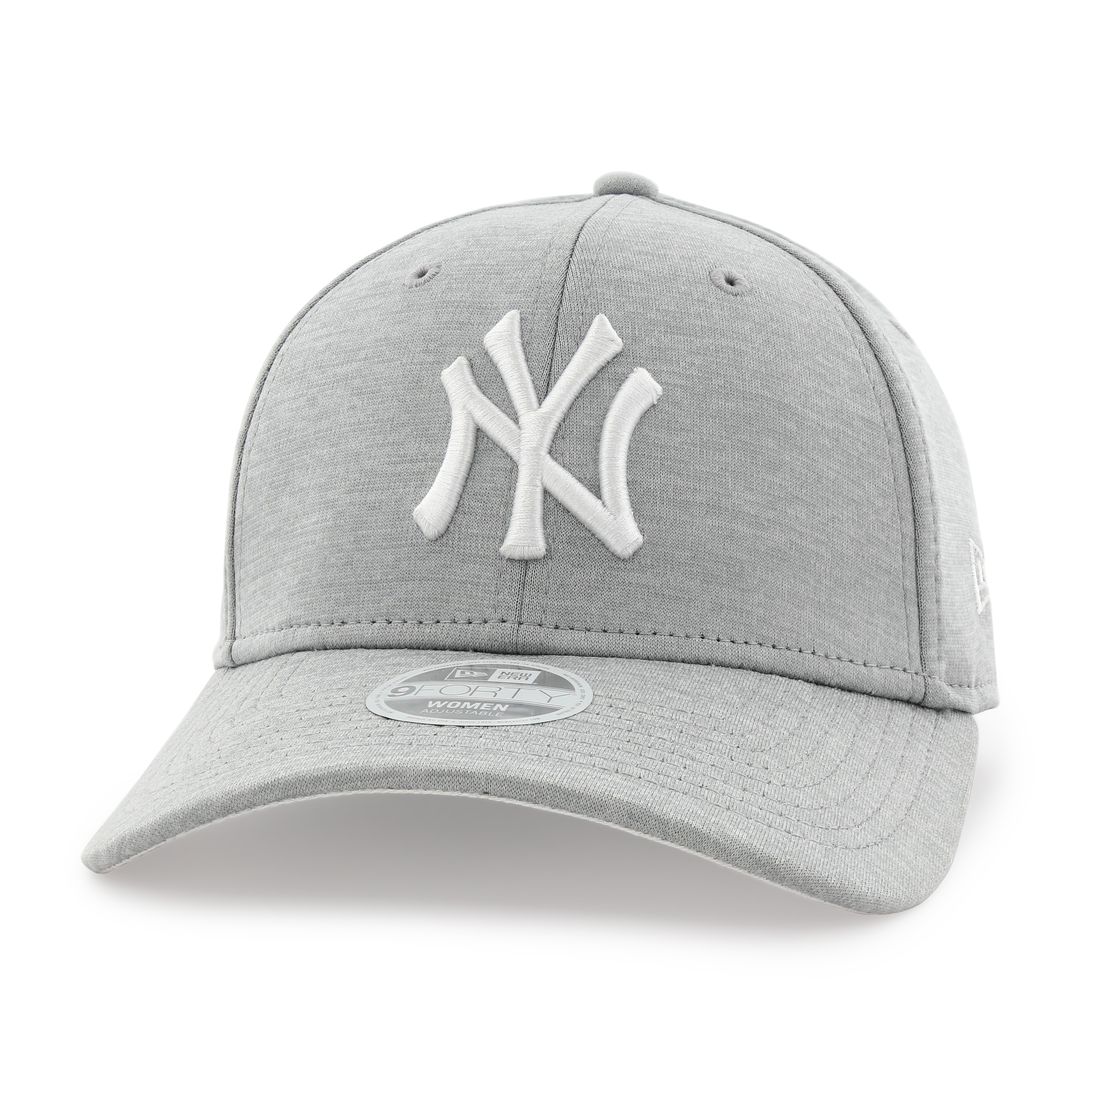 New Era Wmns Tonal New York Yankees Women's Cap Grey